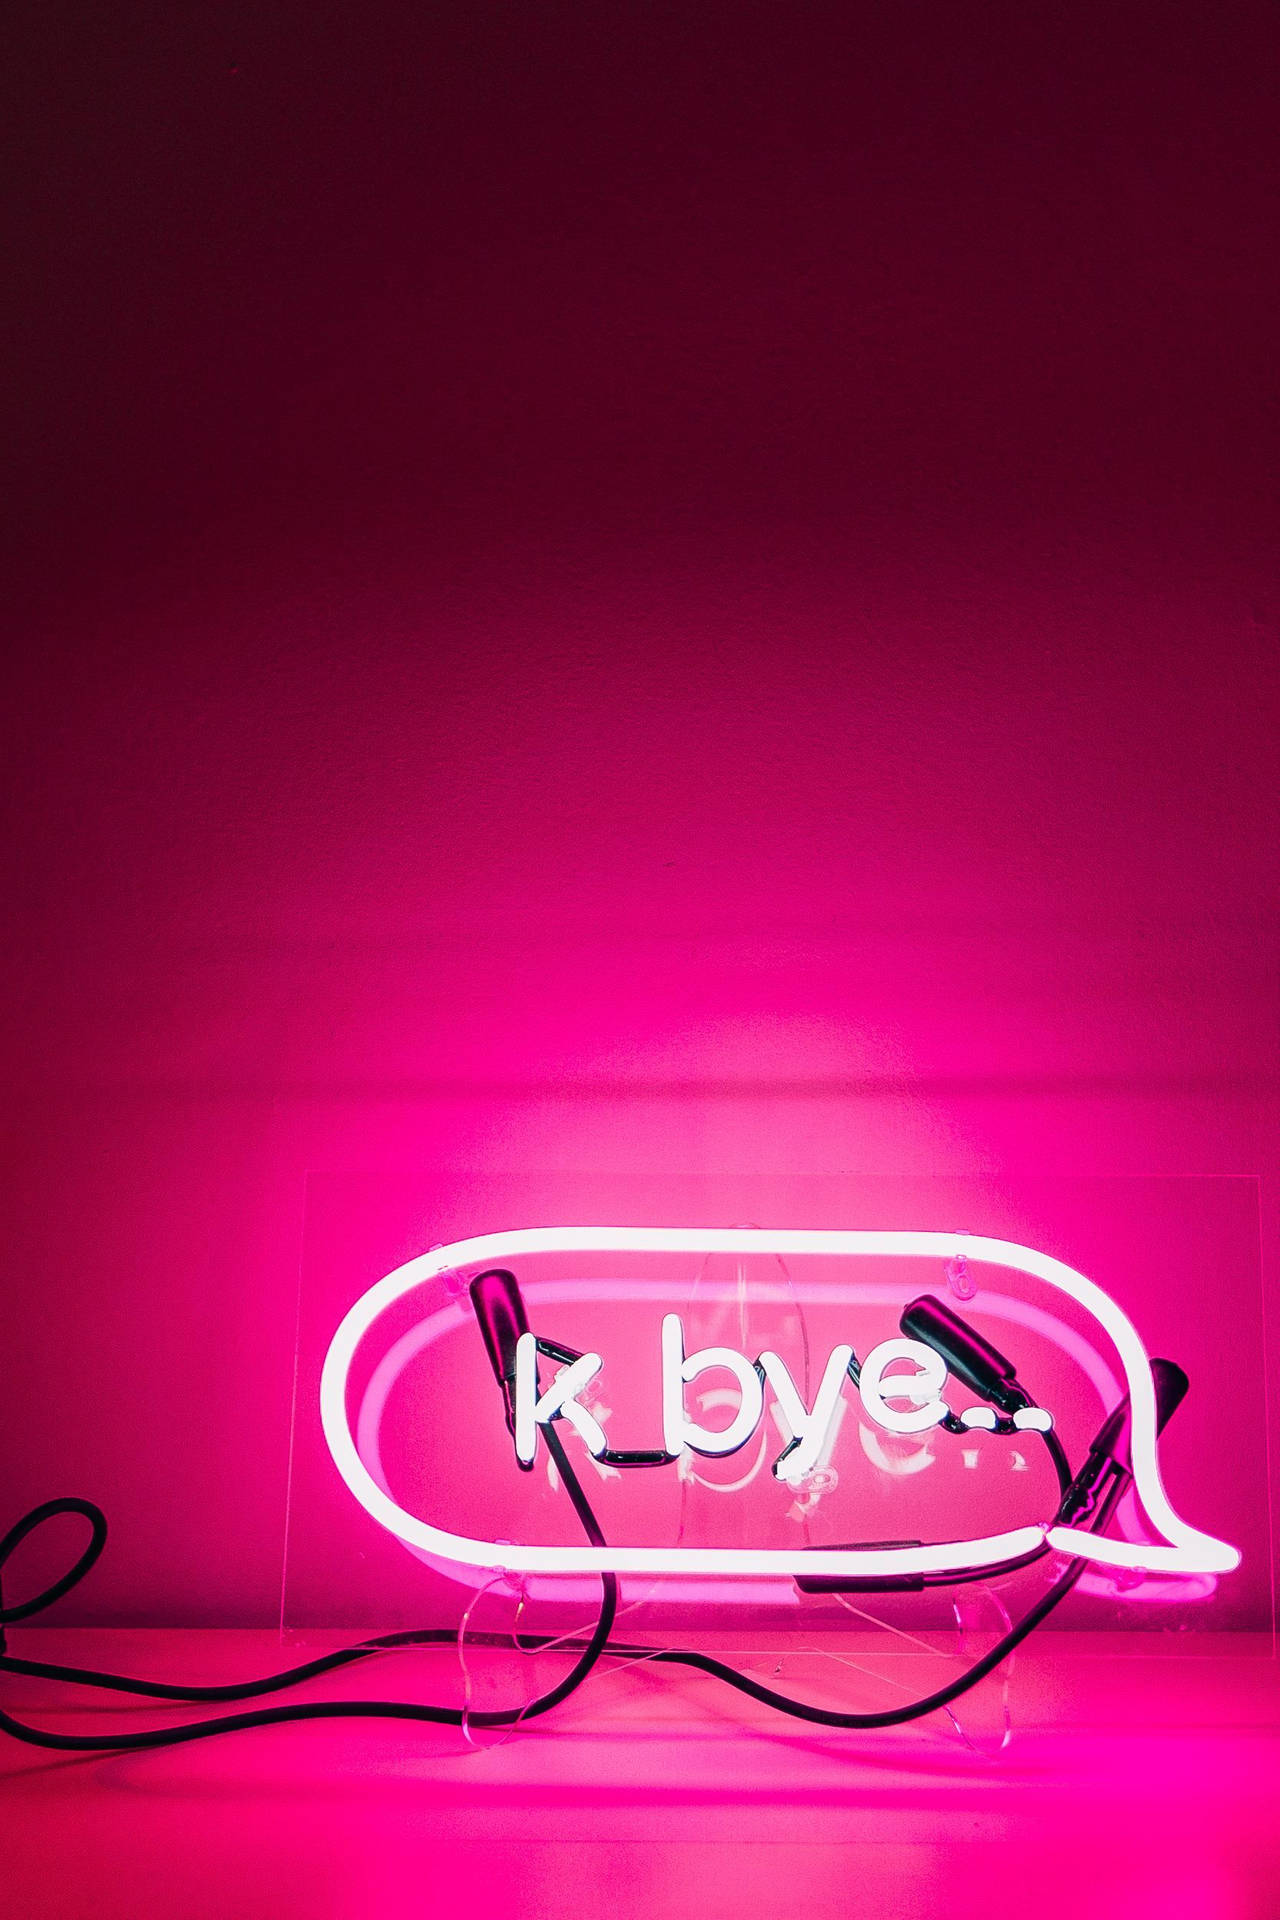 Neon Pink "K Bye" Neon Sign Wallpaper